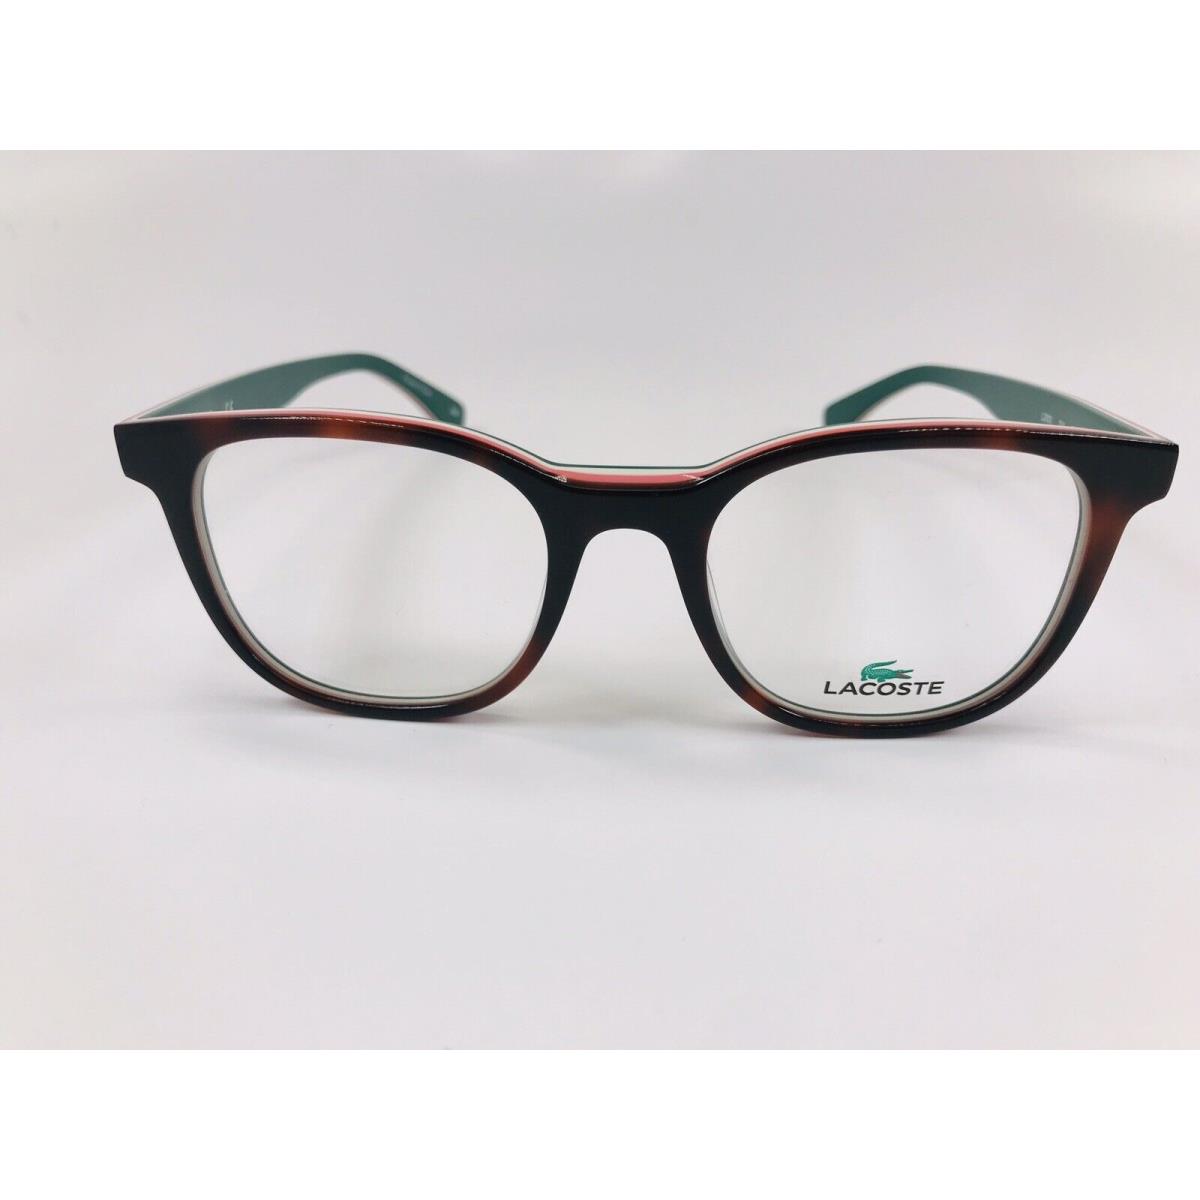 Lacoste eyeglasses  - 214 , Dark Havana & Multi Colored Layers Frame 1